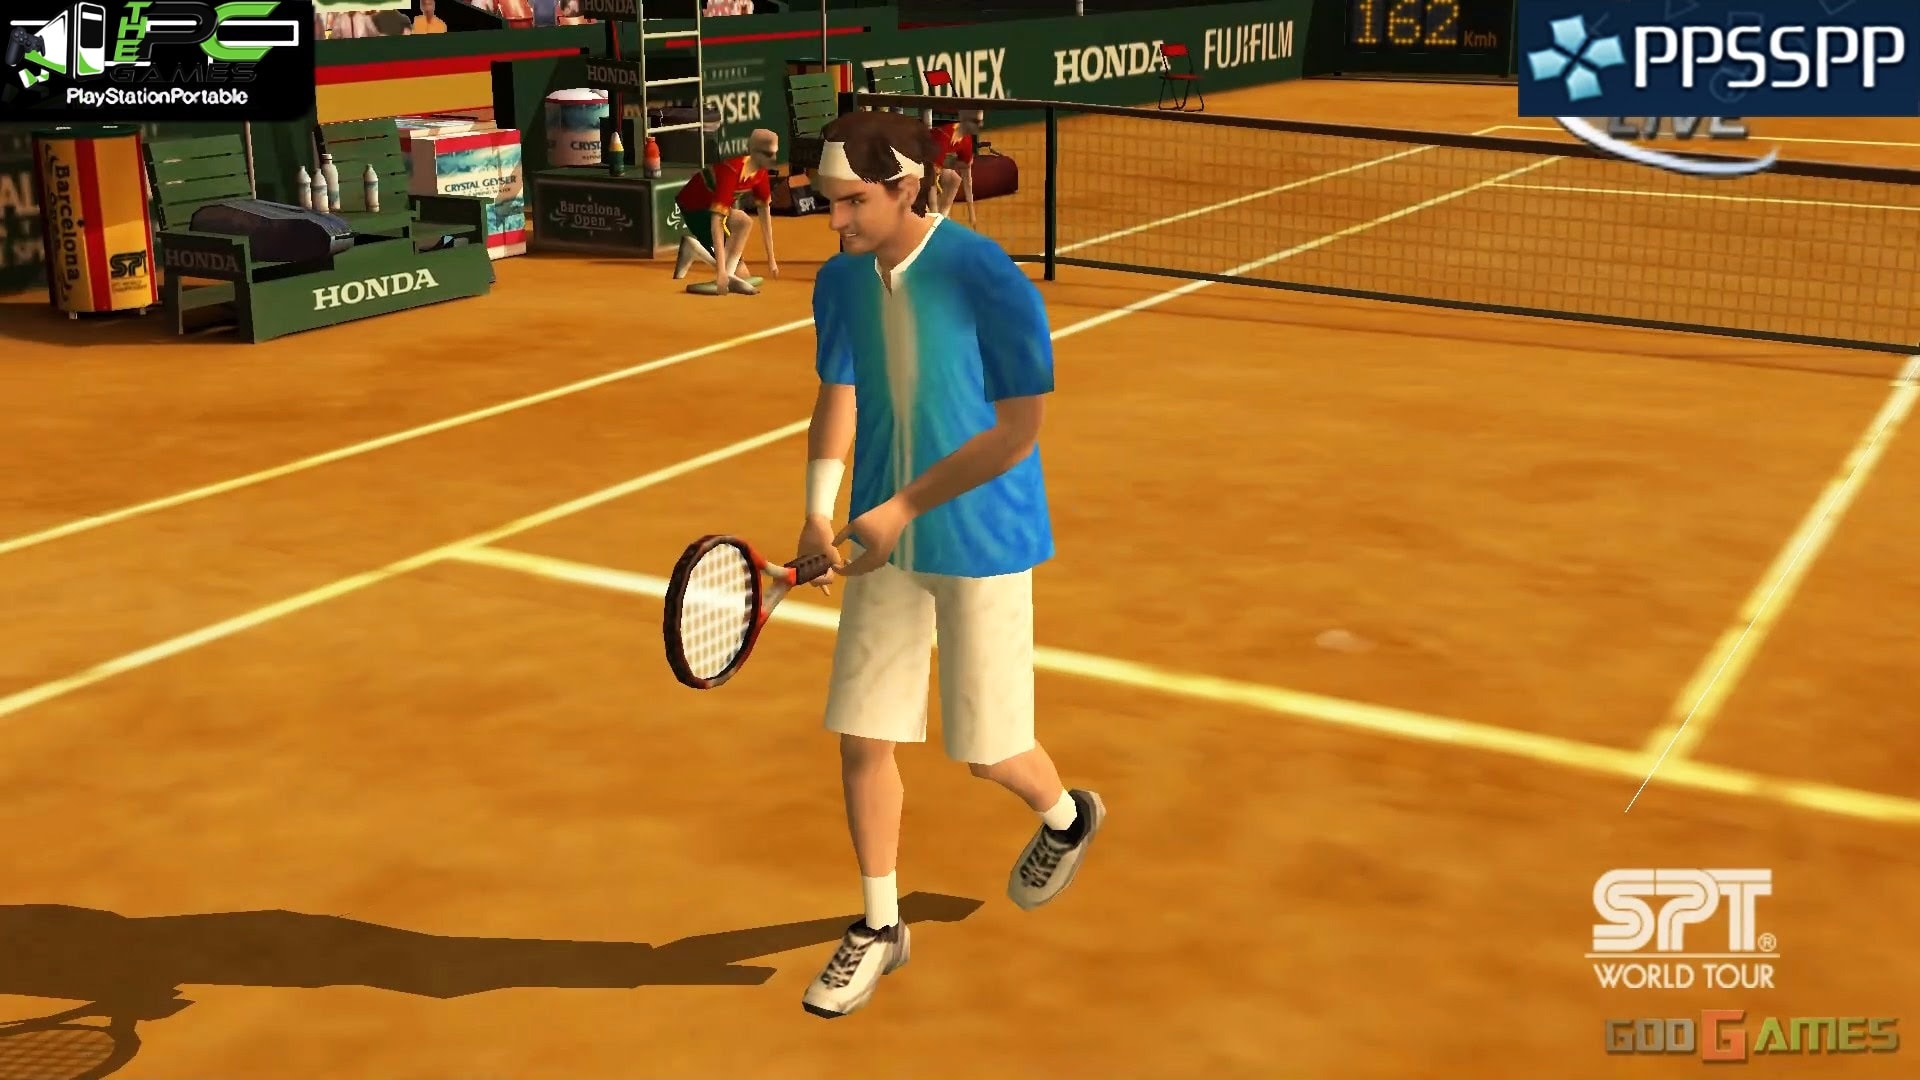 Virtua tennis 3 free download